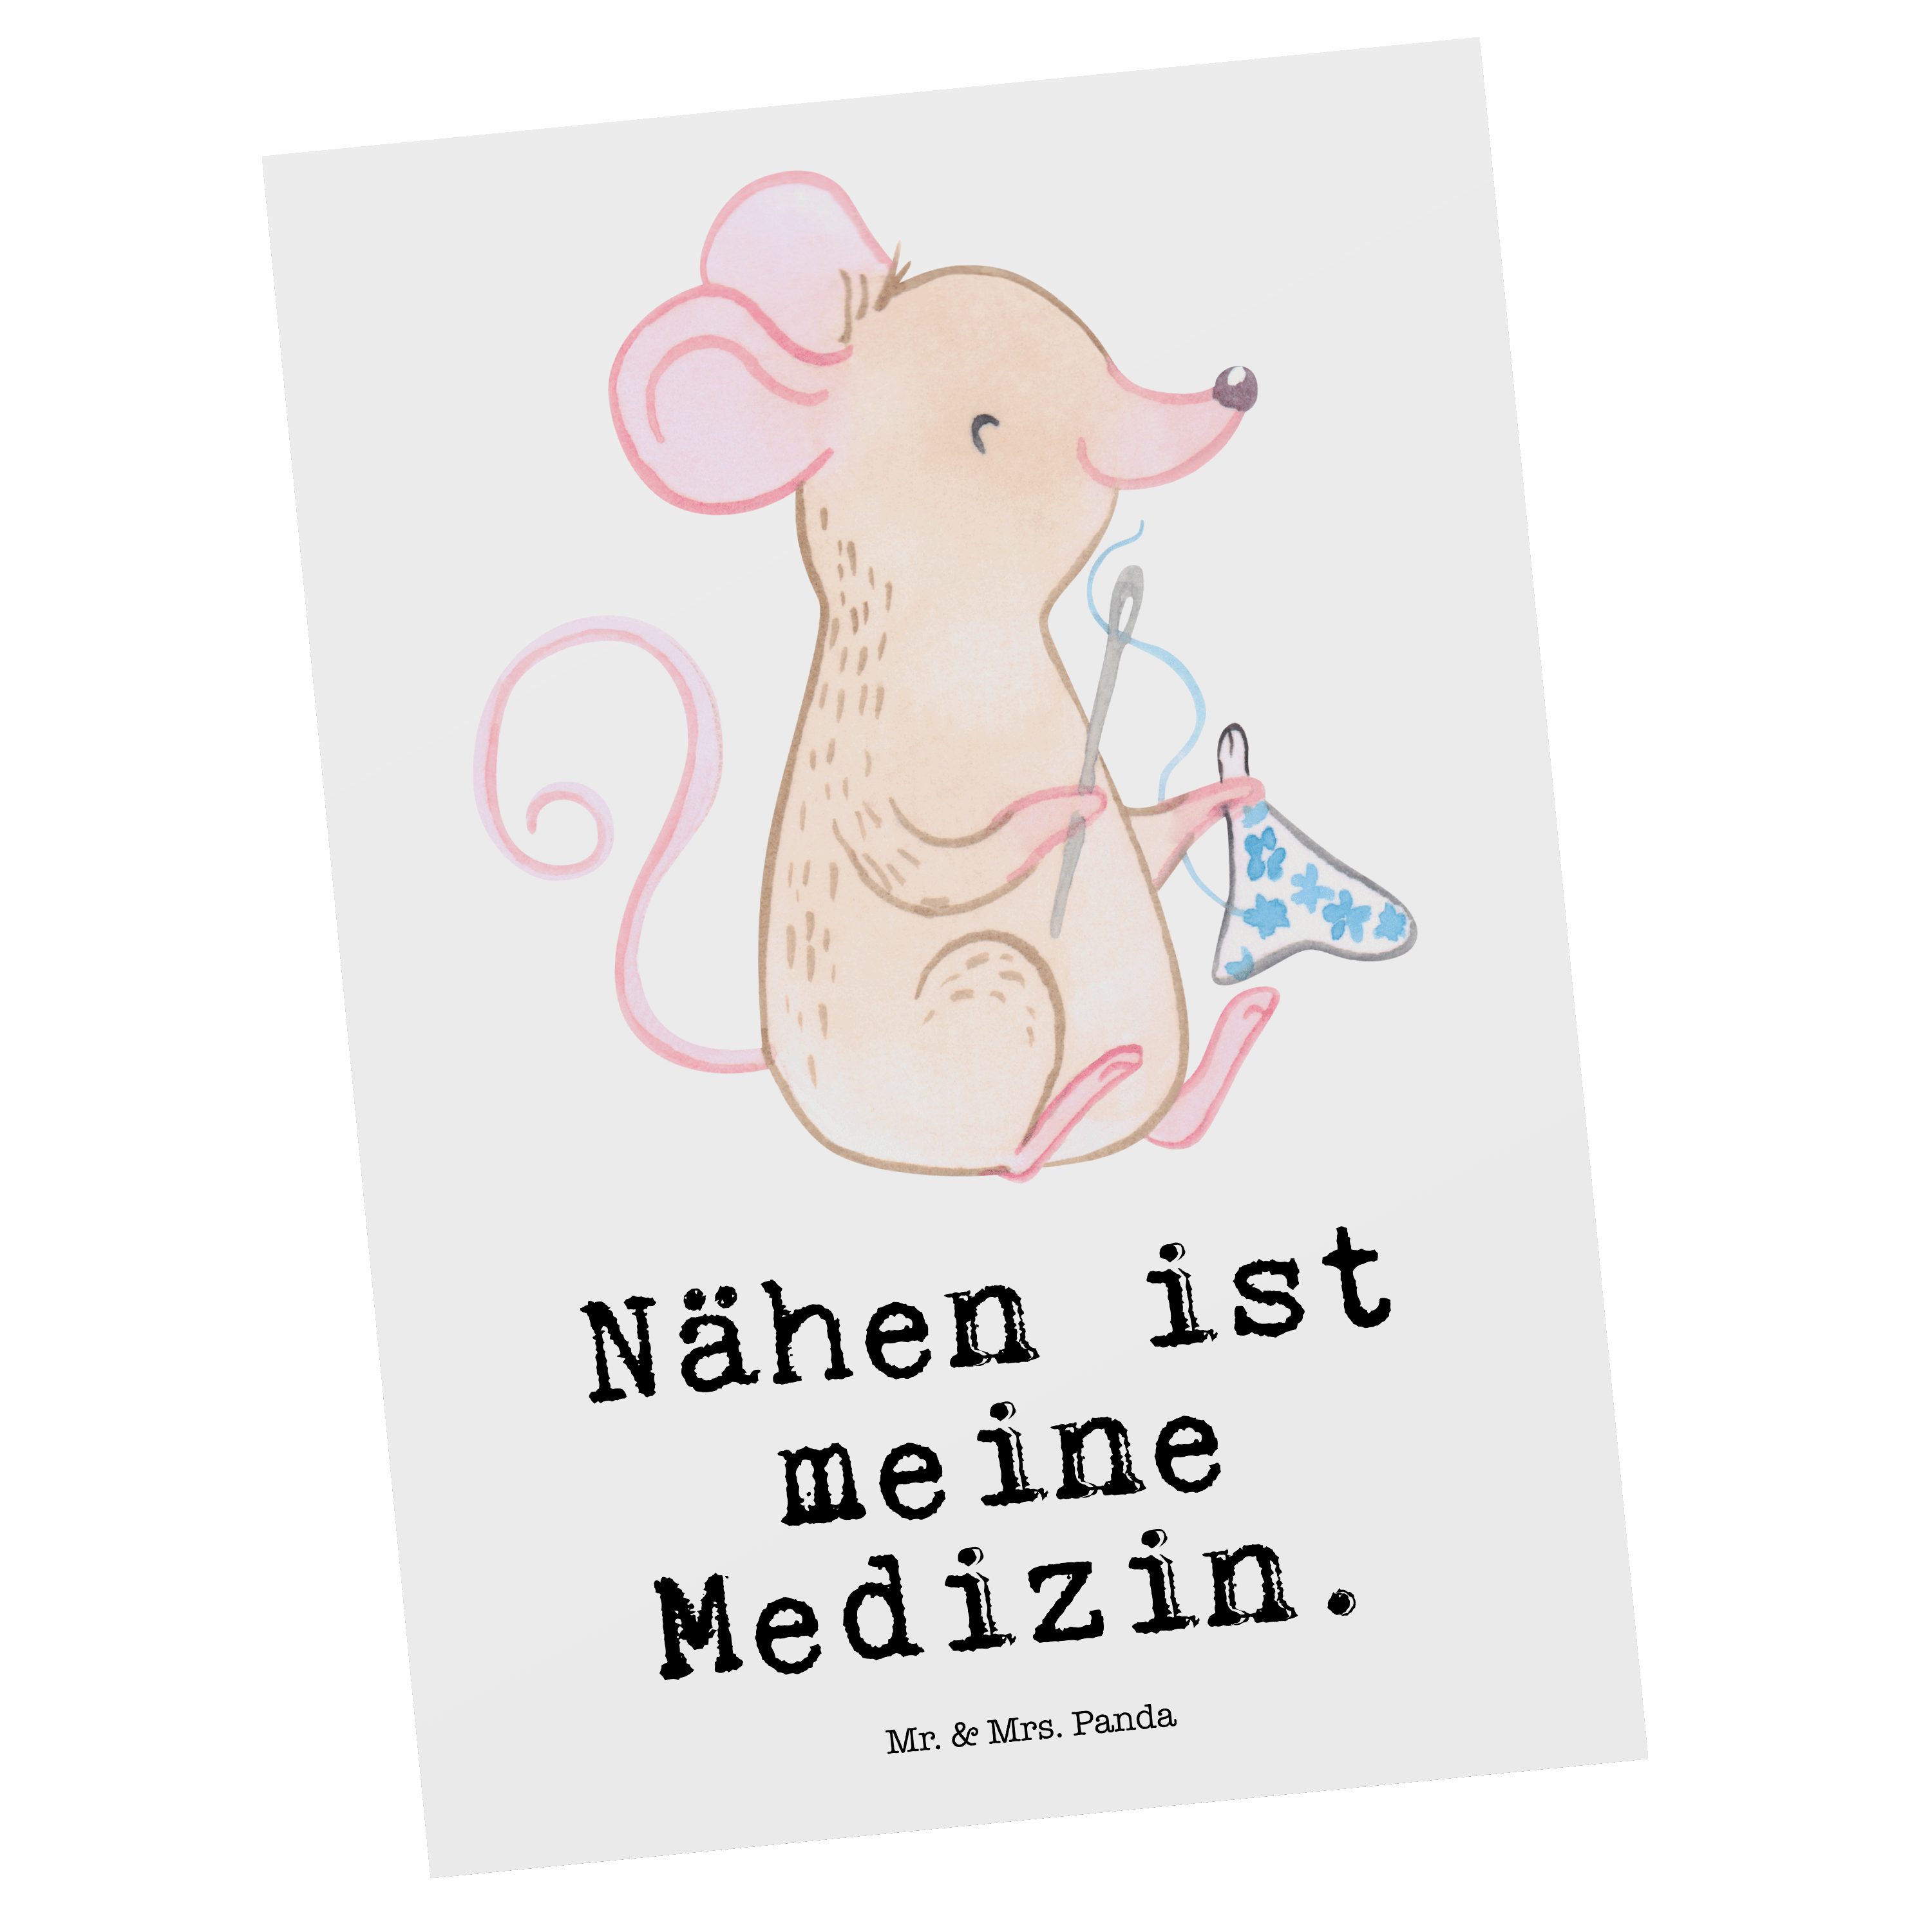 Mr. & Mrs. Panda Postkarte Maus Medizin - Nähkur Weiß Geschenk, DIY, Sport, - Nähprojekte, Nähen